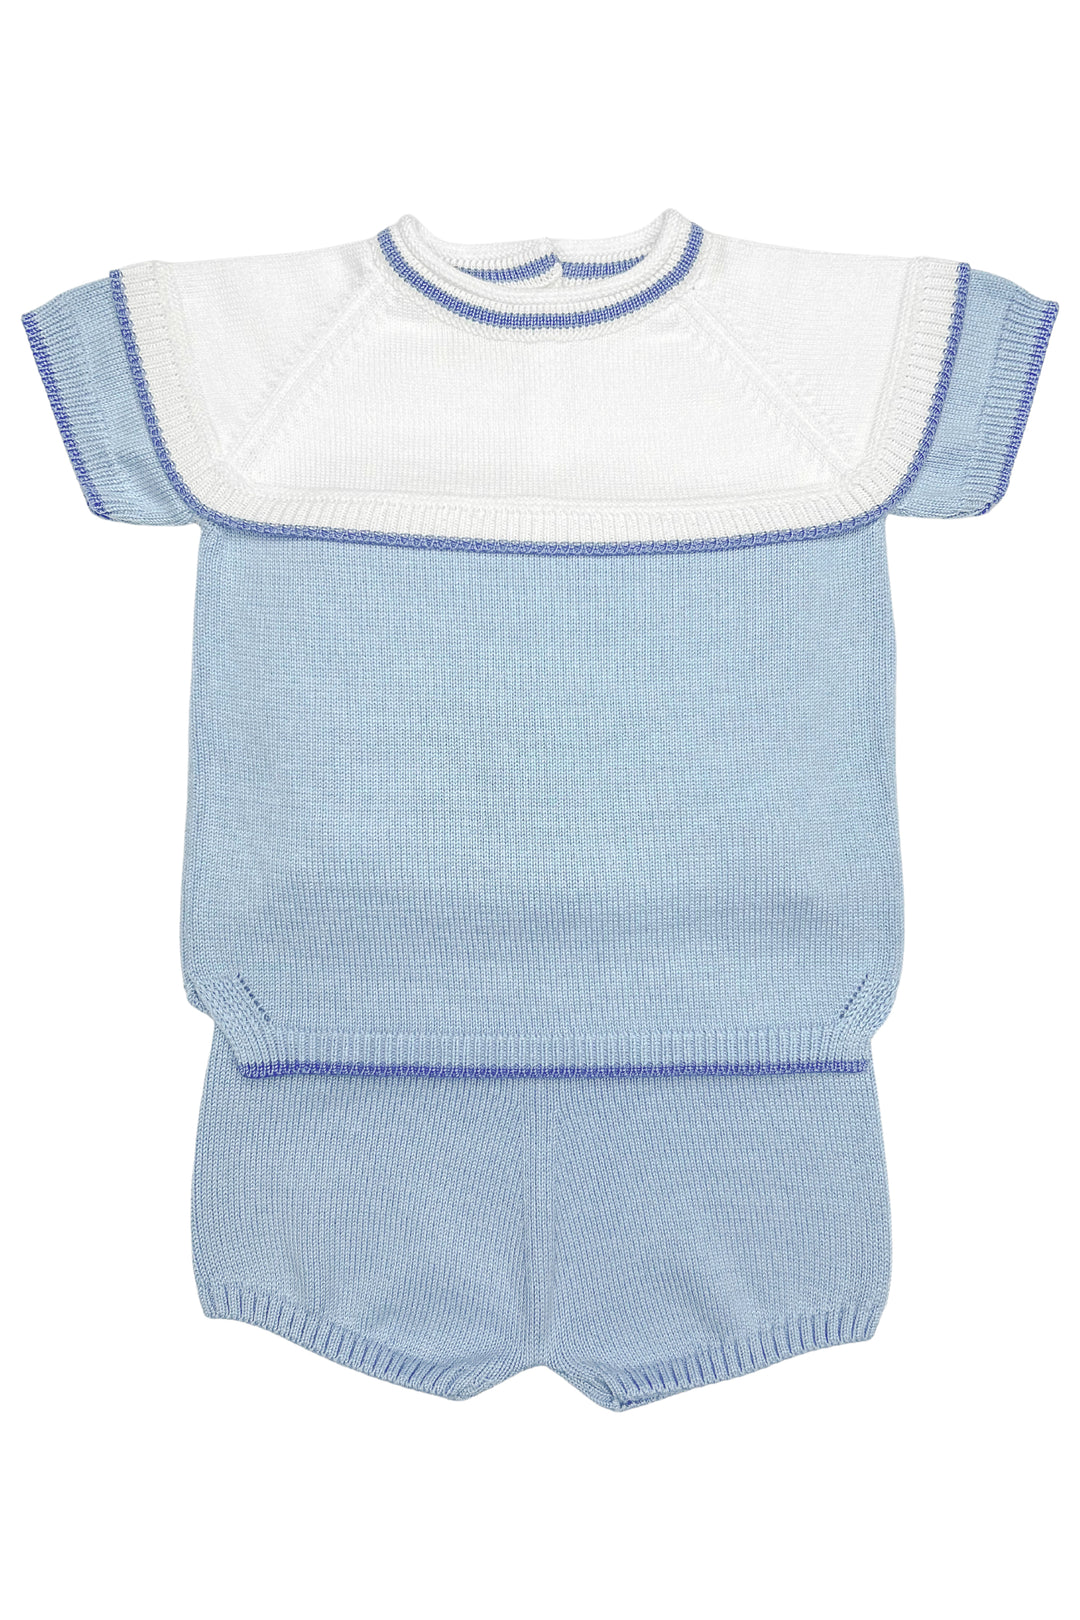 Granlei "Theo" Powder Blue, White & Dusky Blue Knit Top & Shorts | Millie and John